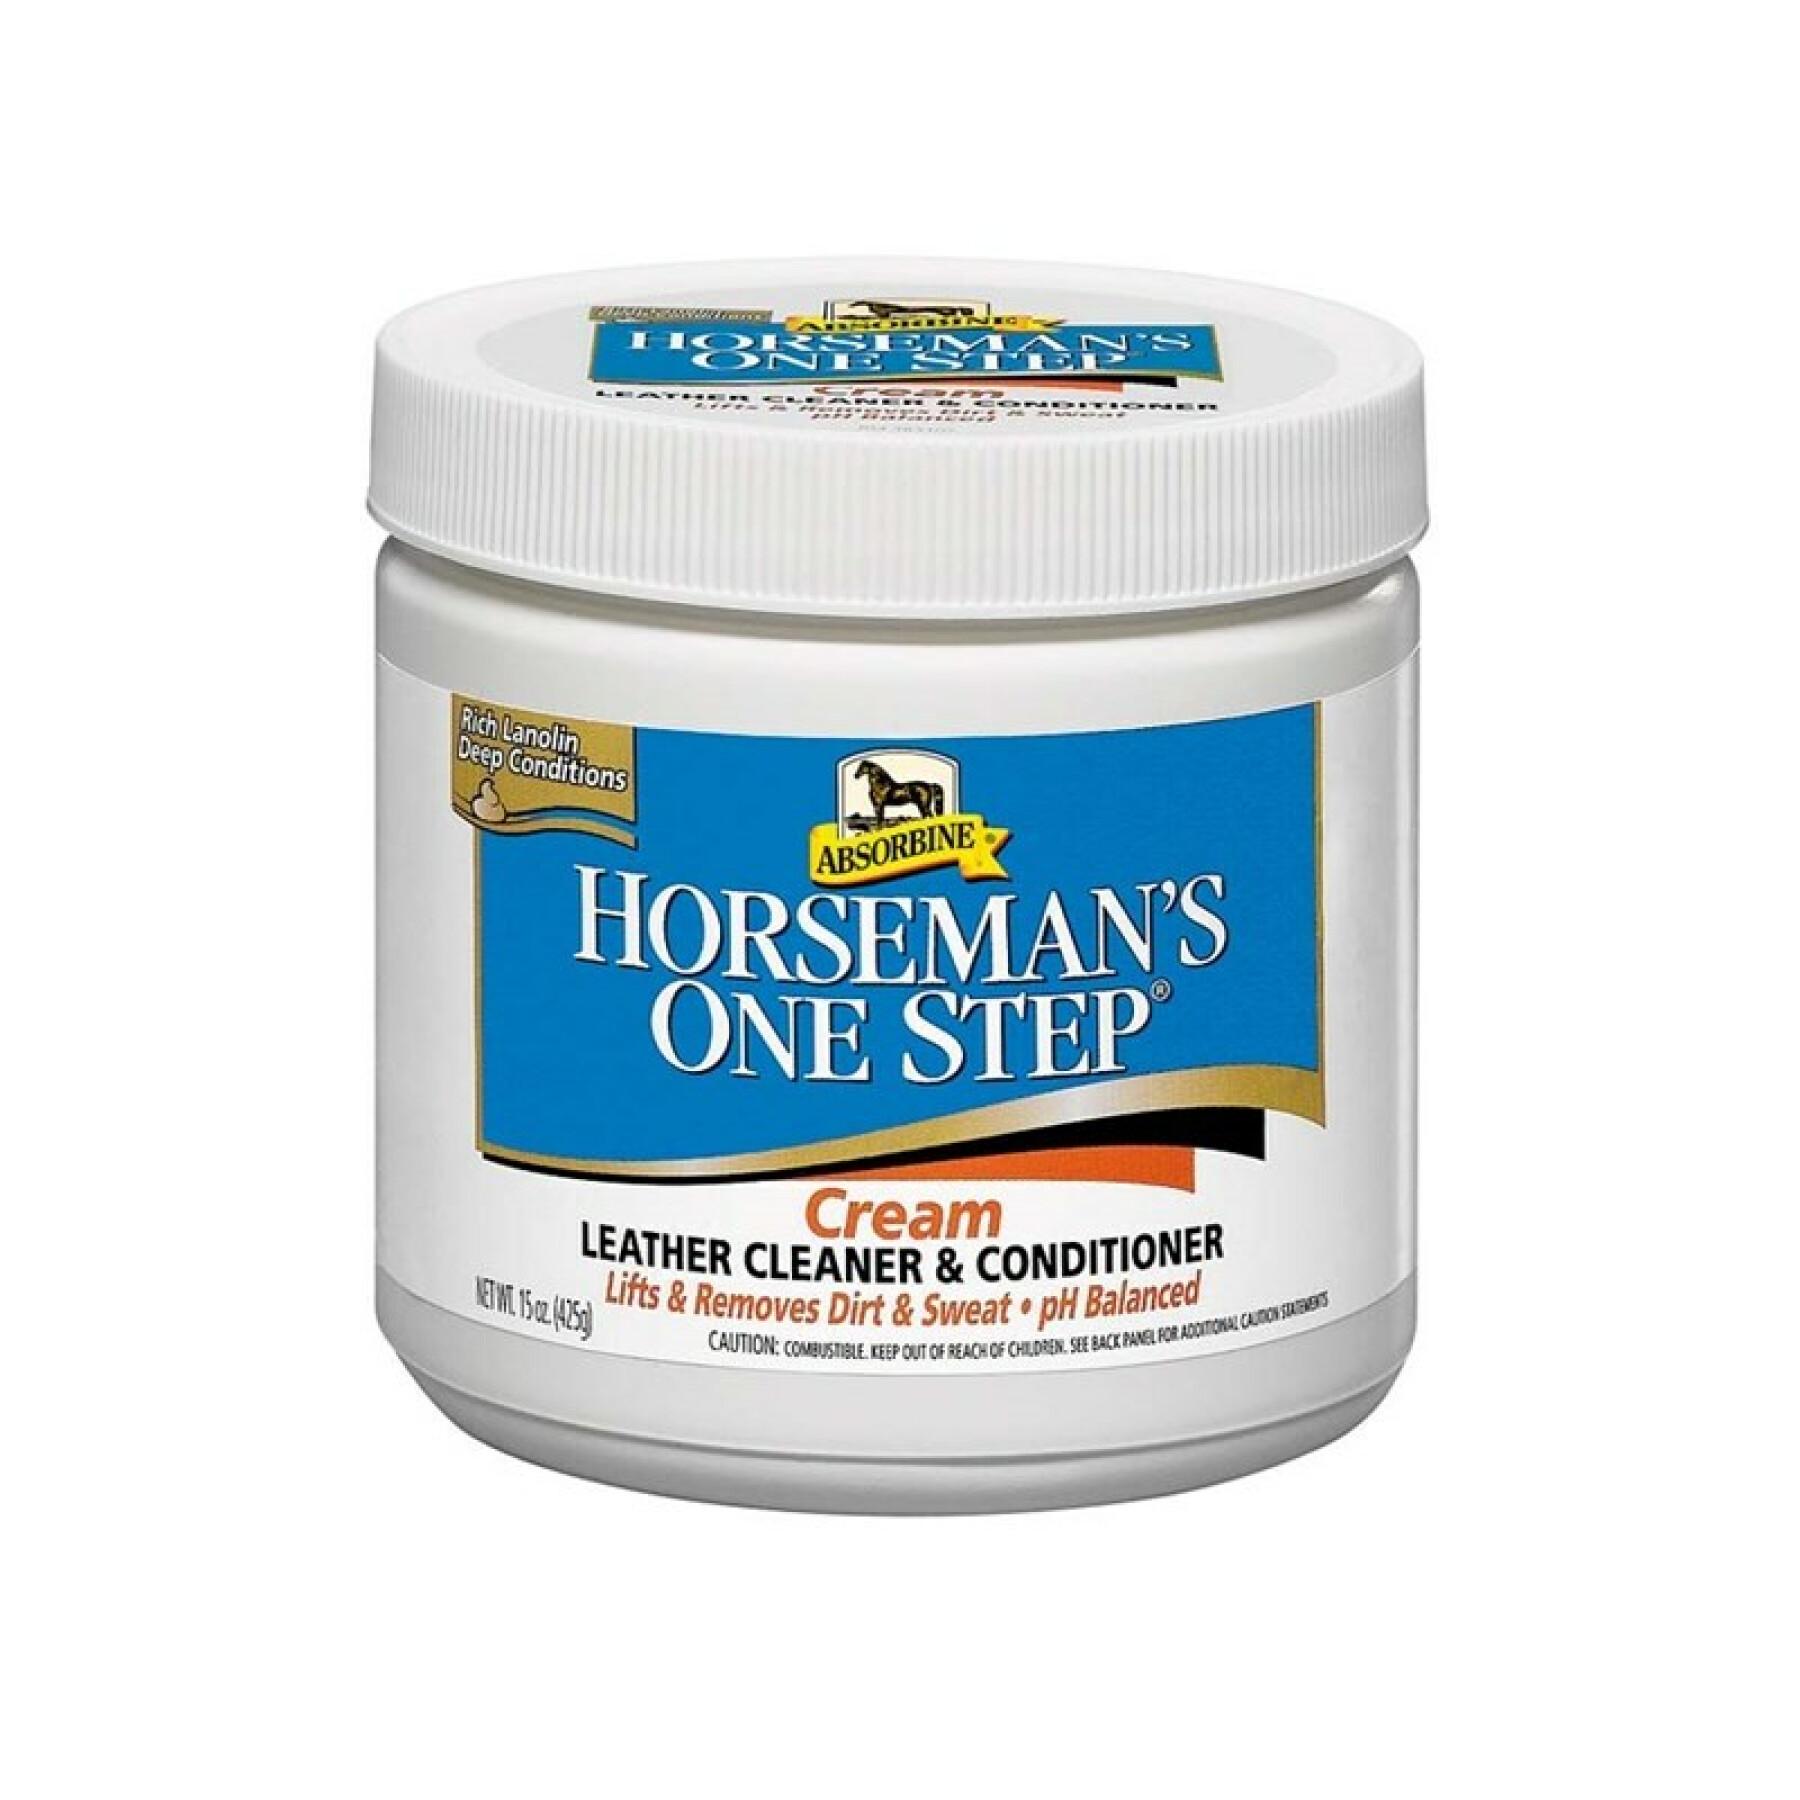 Crema de cuero Absorbine Horseman's one step 425 g